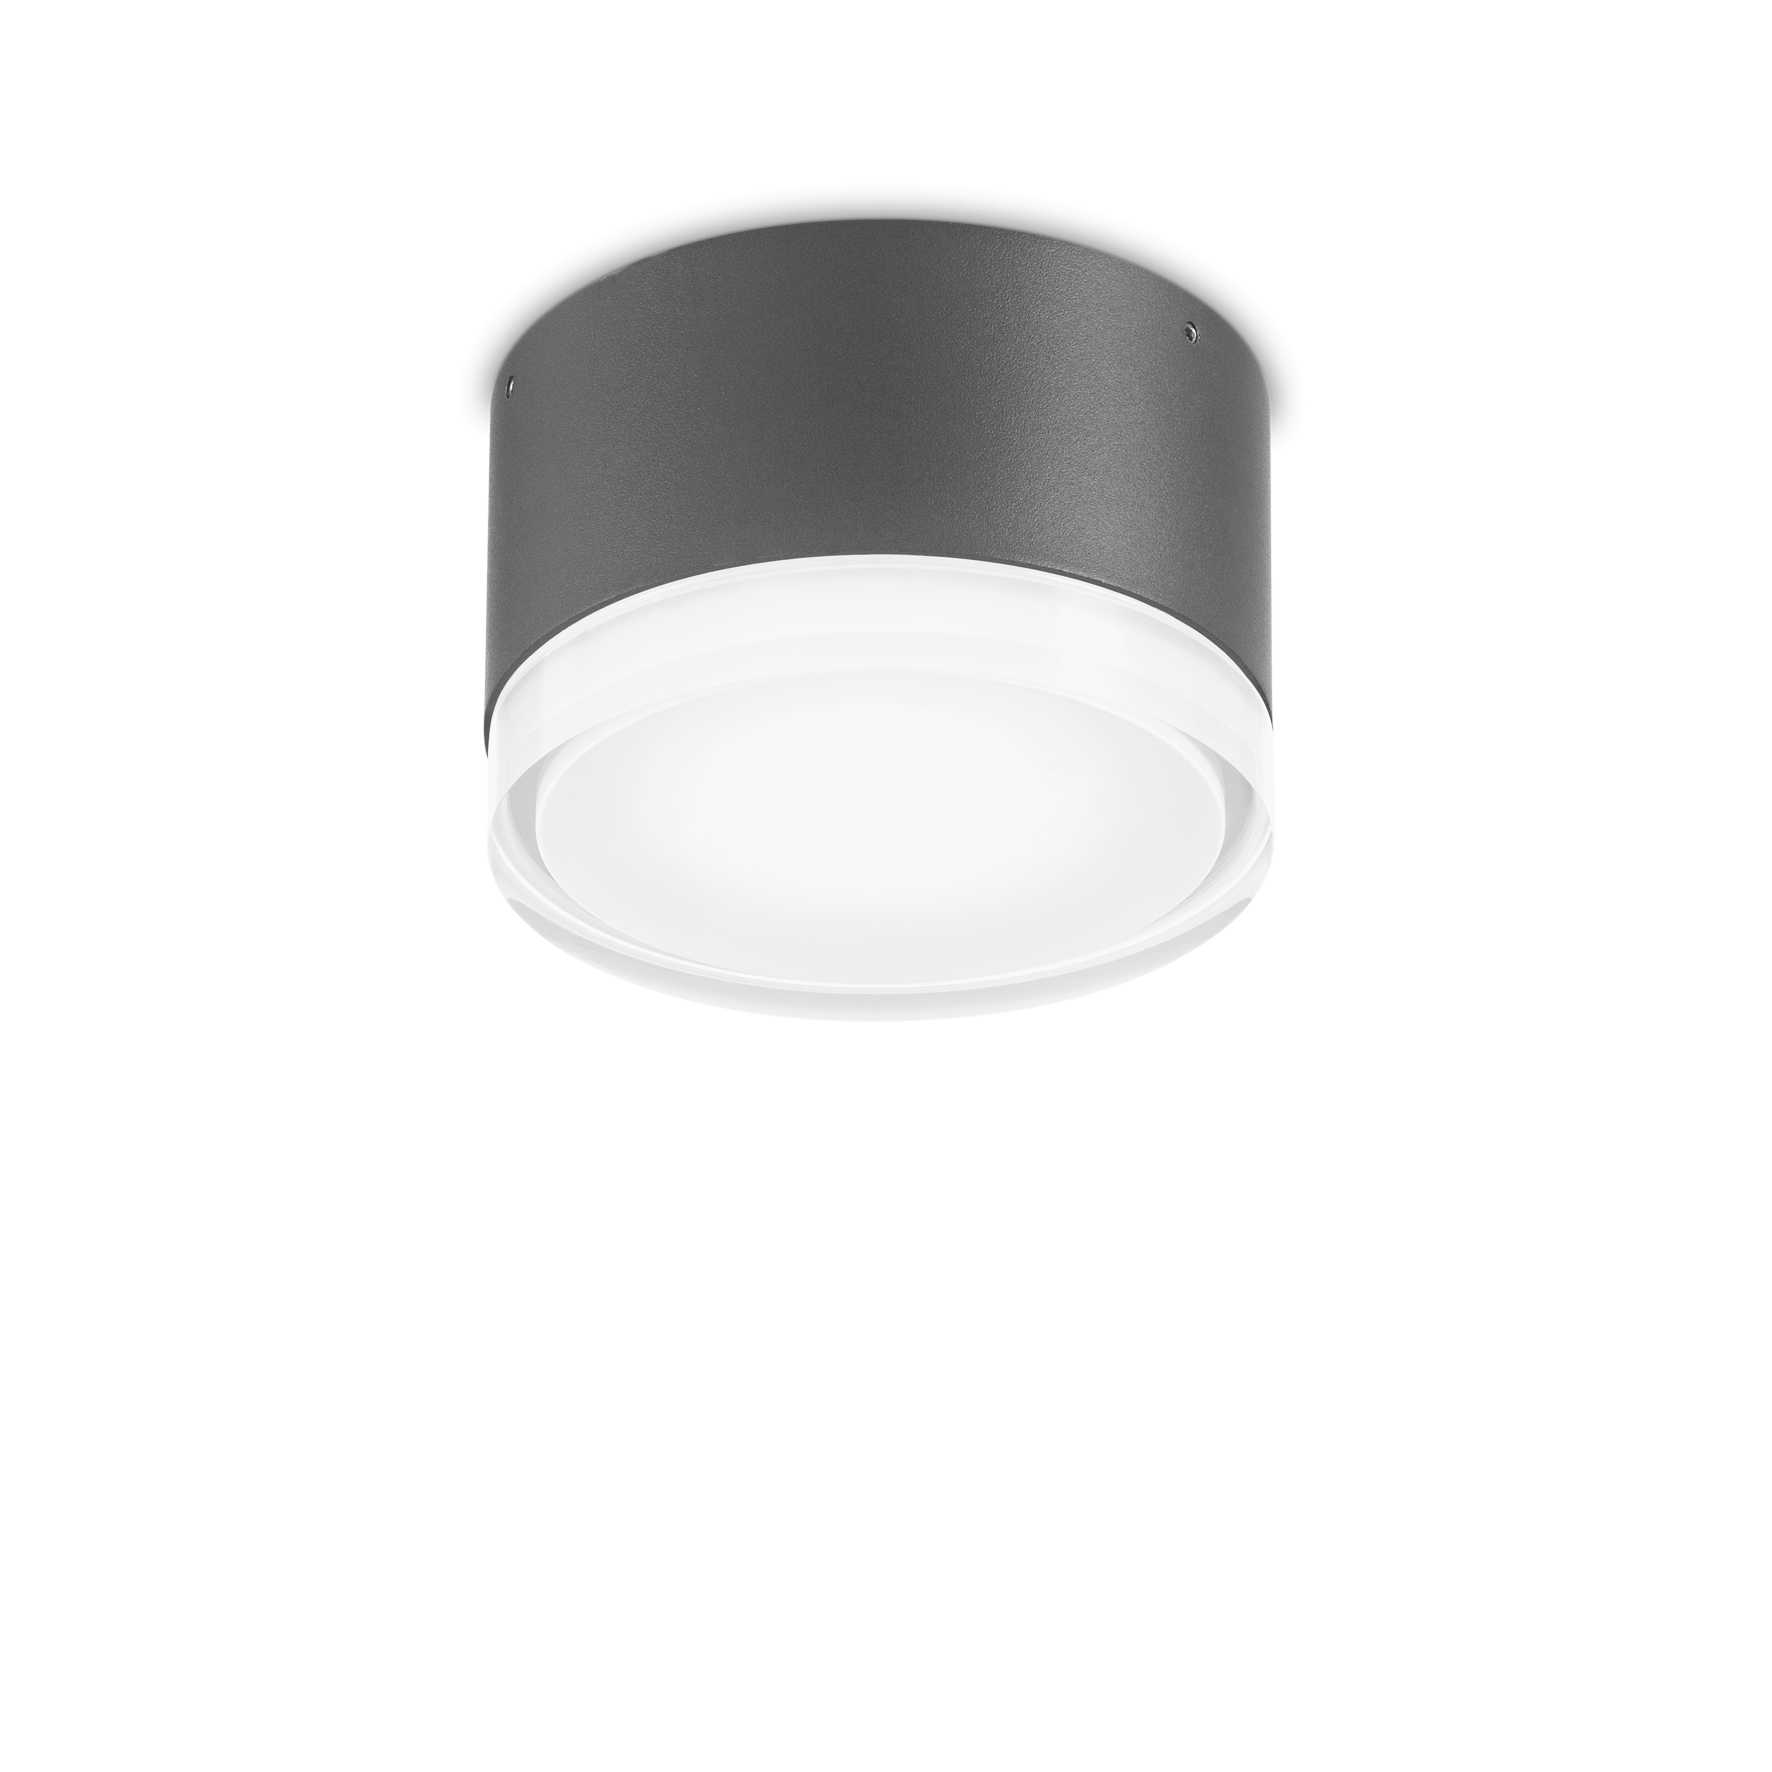 AD hotelska oprema Vanjska stropna lampa Urano pl1 mala- Antracit slika proizvoda